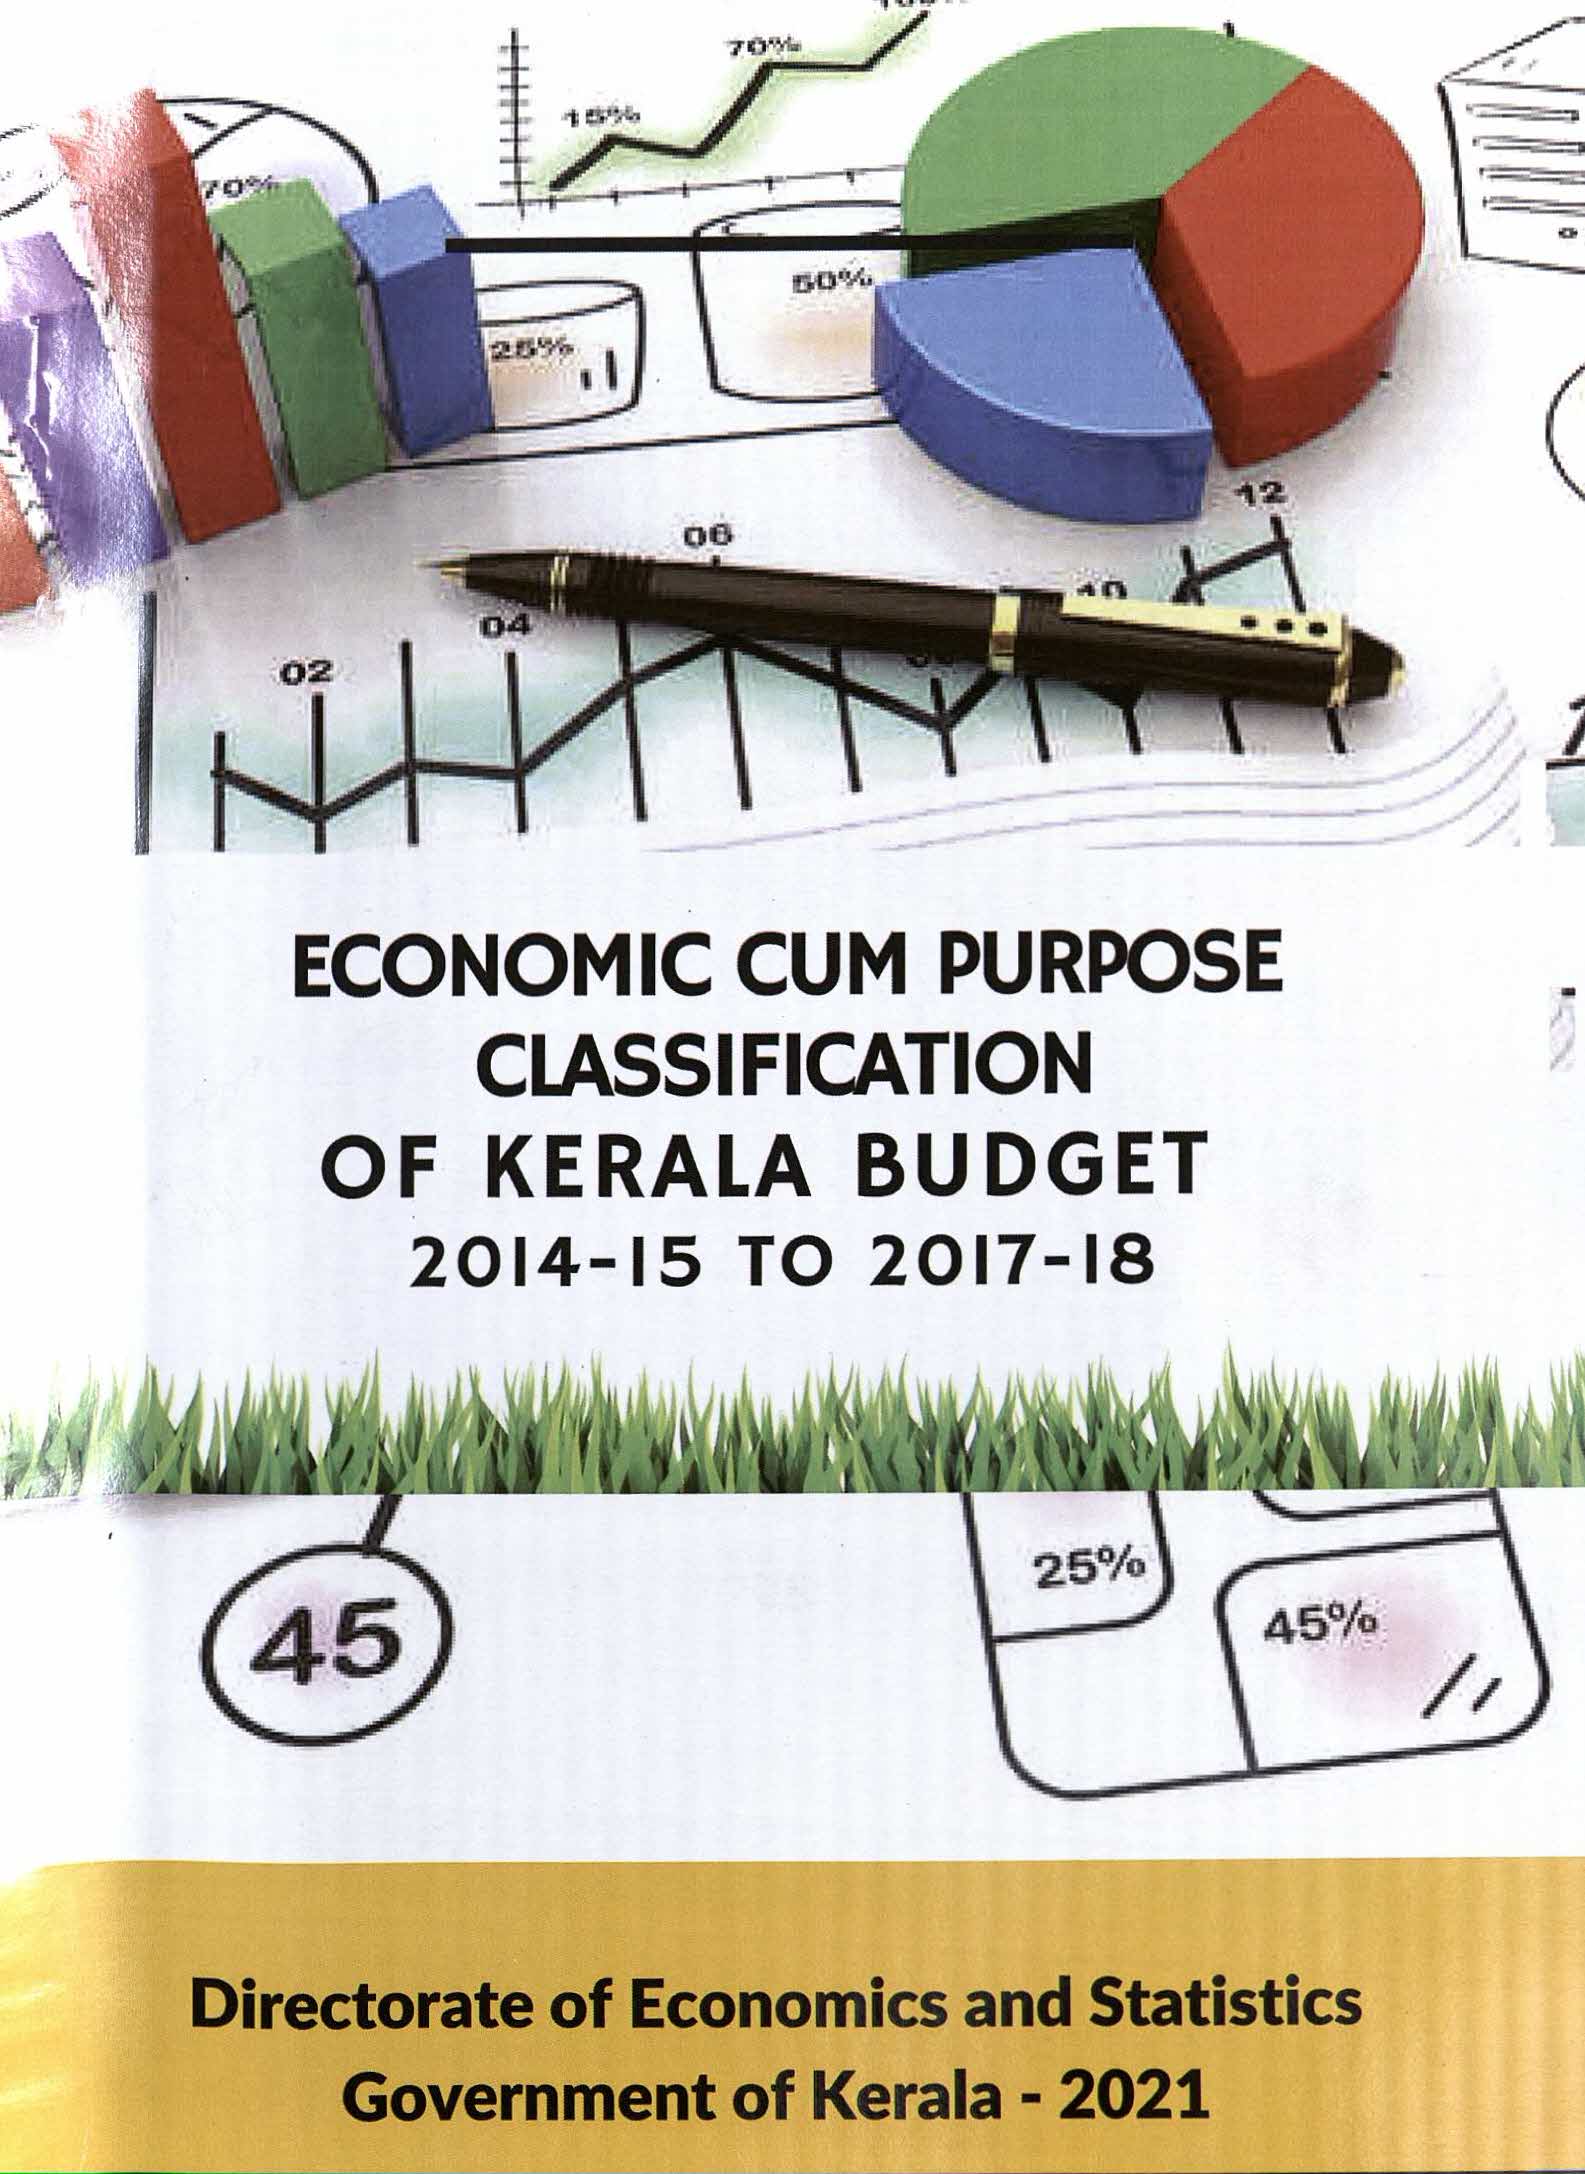 Economic cum purpose classification of Kerala budget 2014-15 to 2017-18